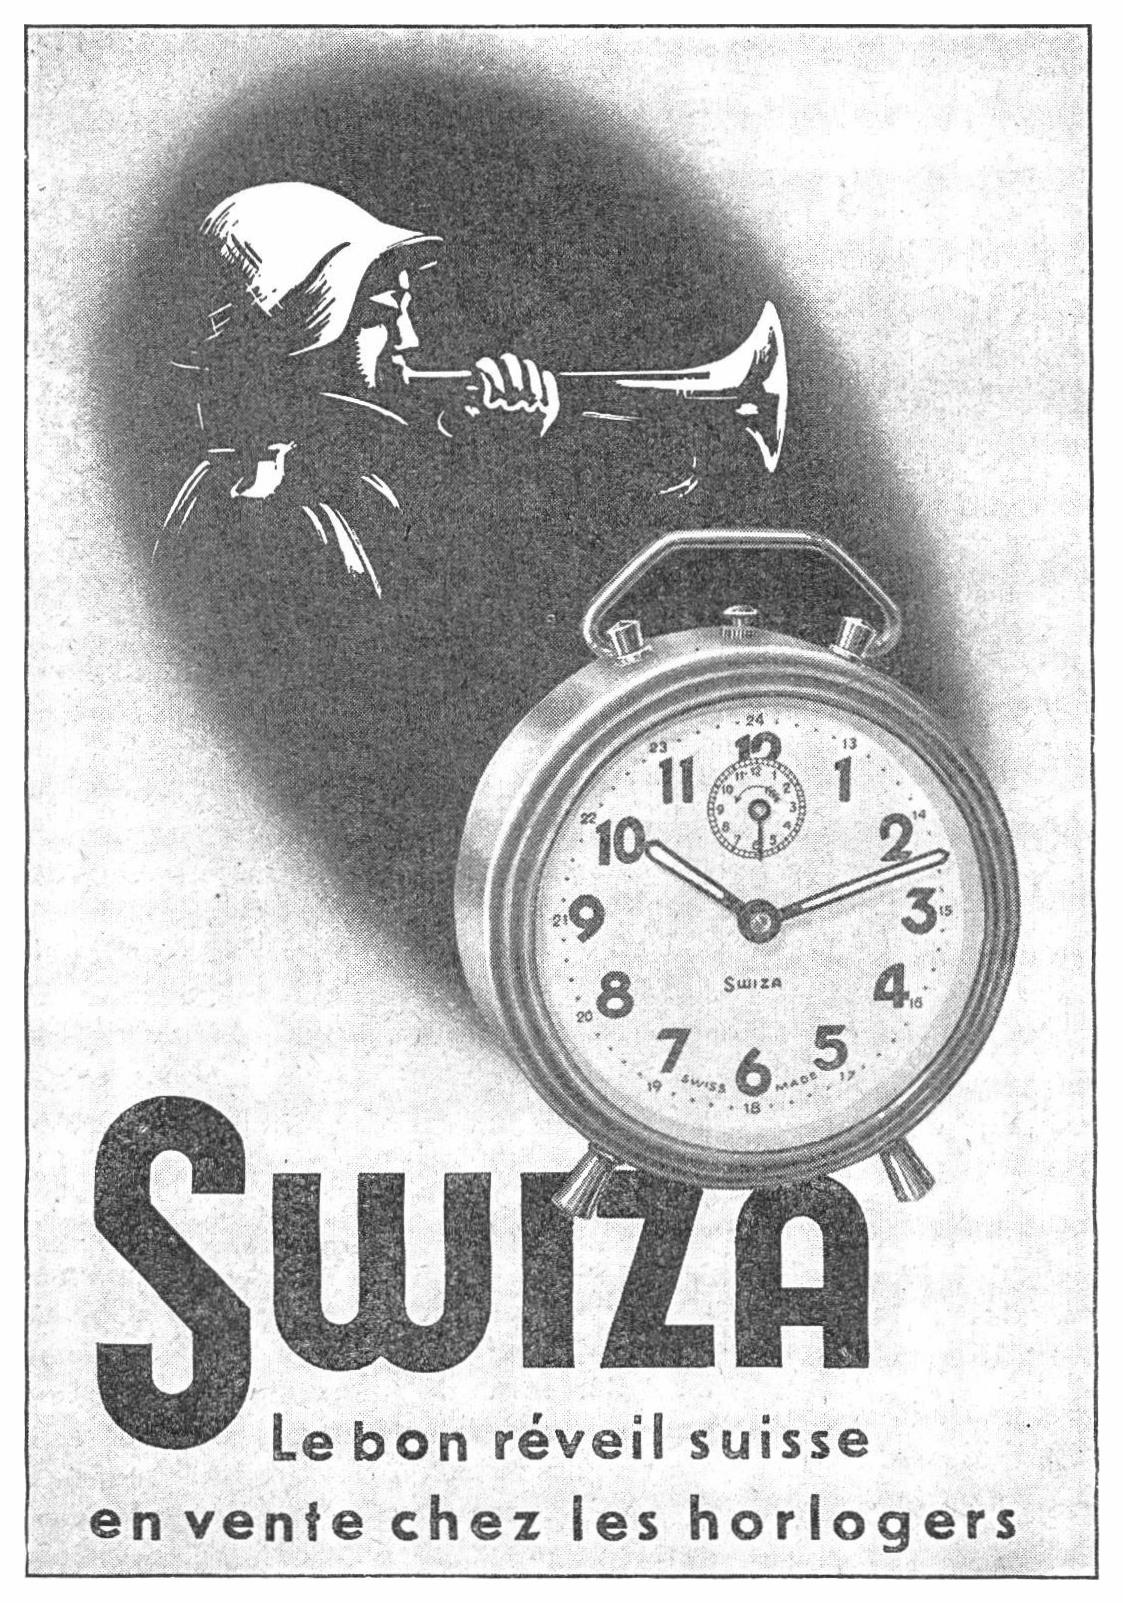 Swiza 1941 115.jpg